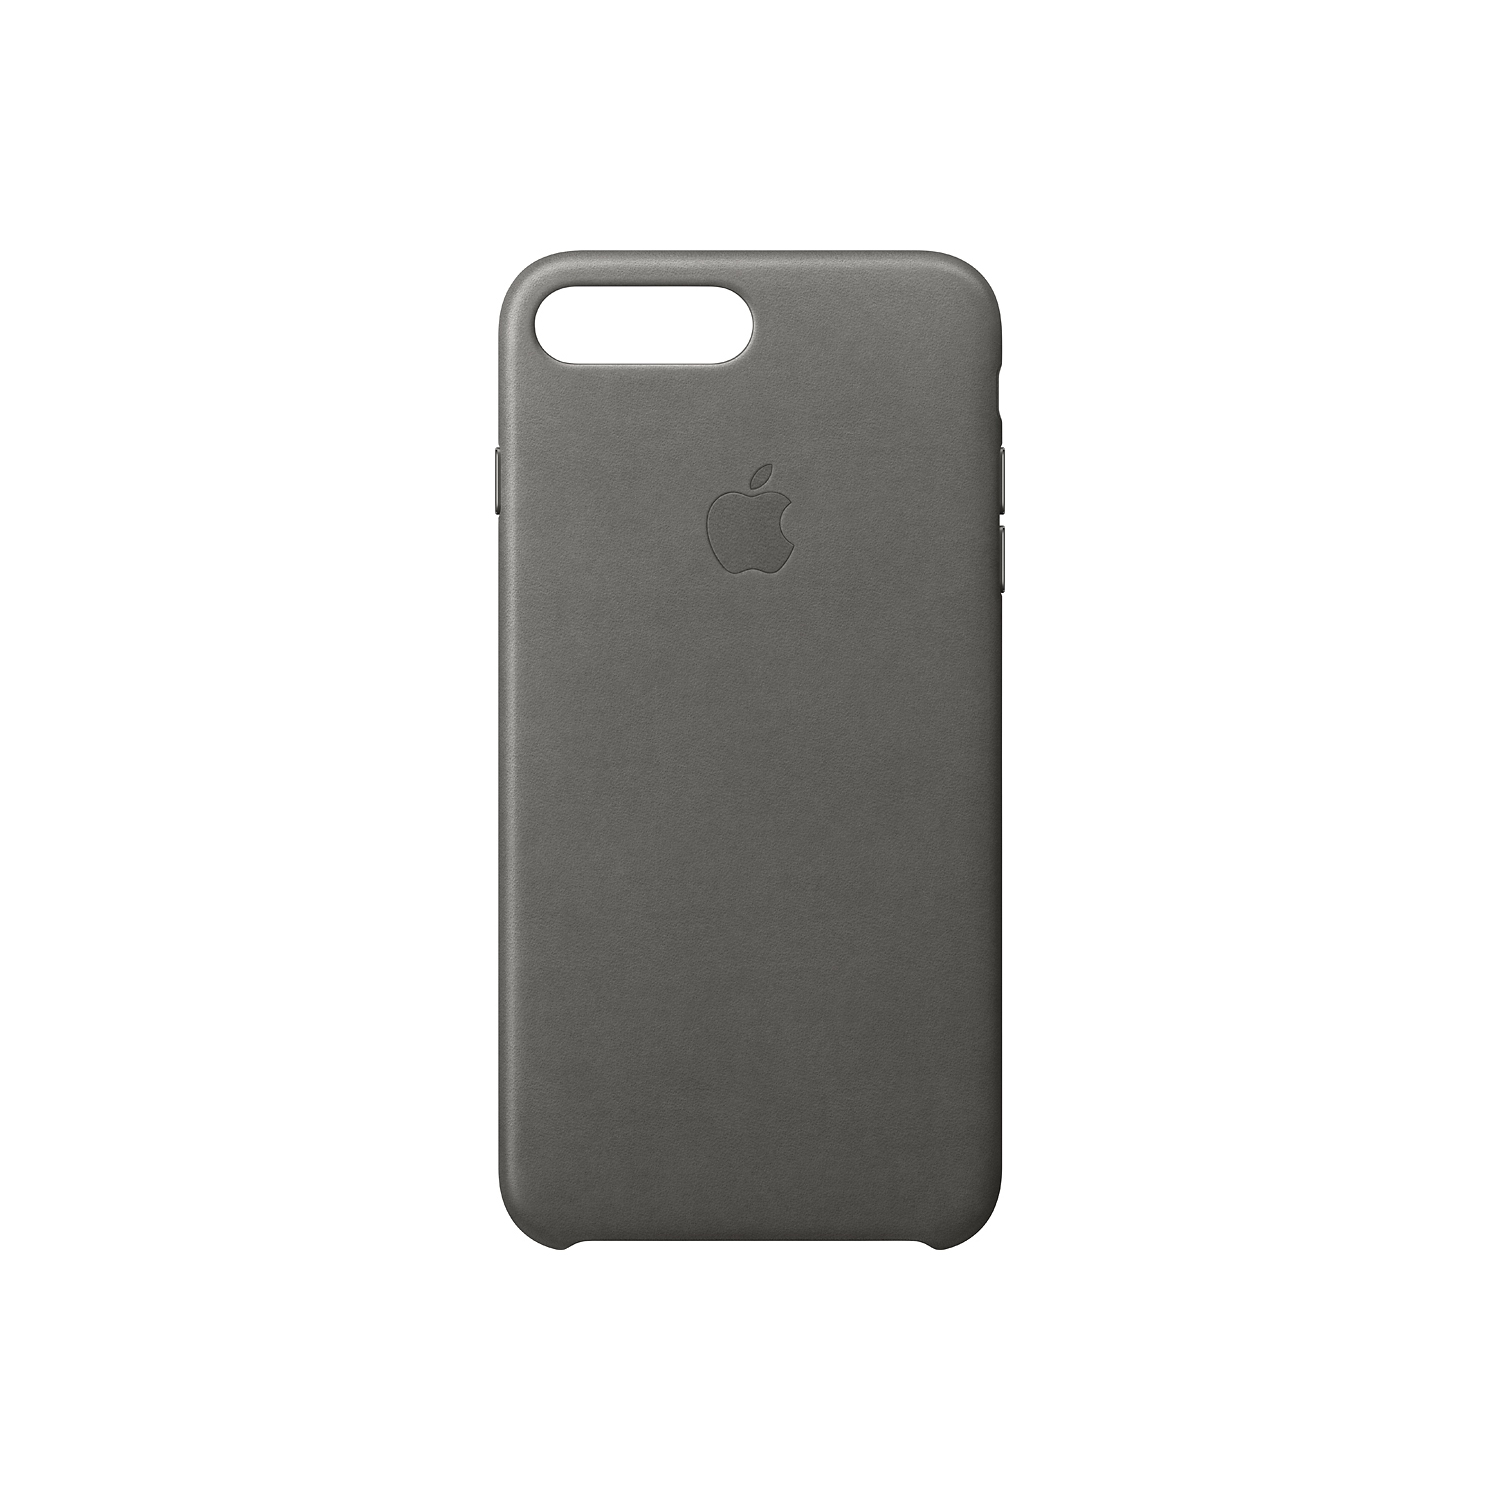 Apple - iPhone 7 Plus Leather Case - Storm Gray